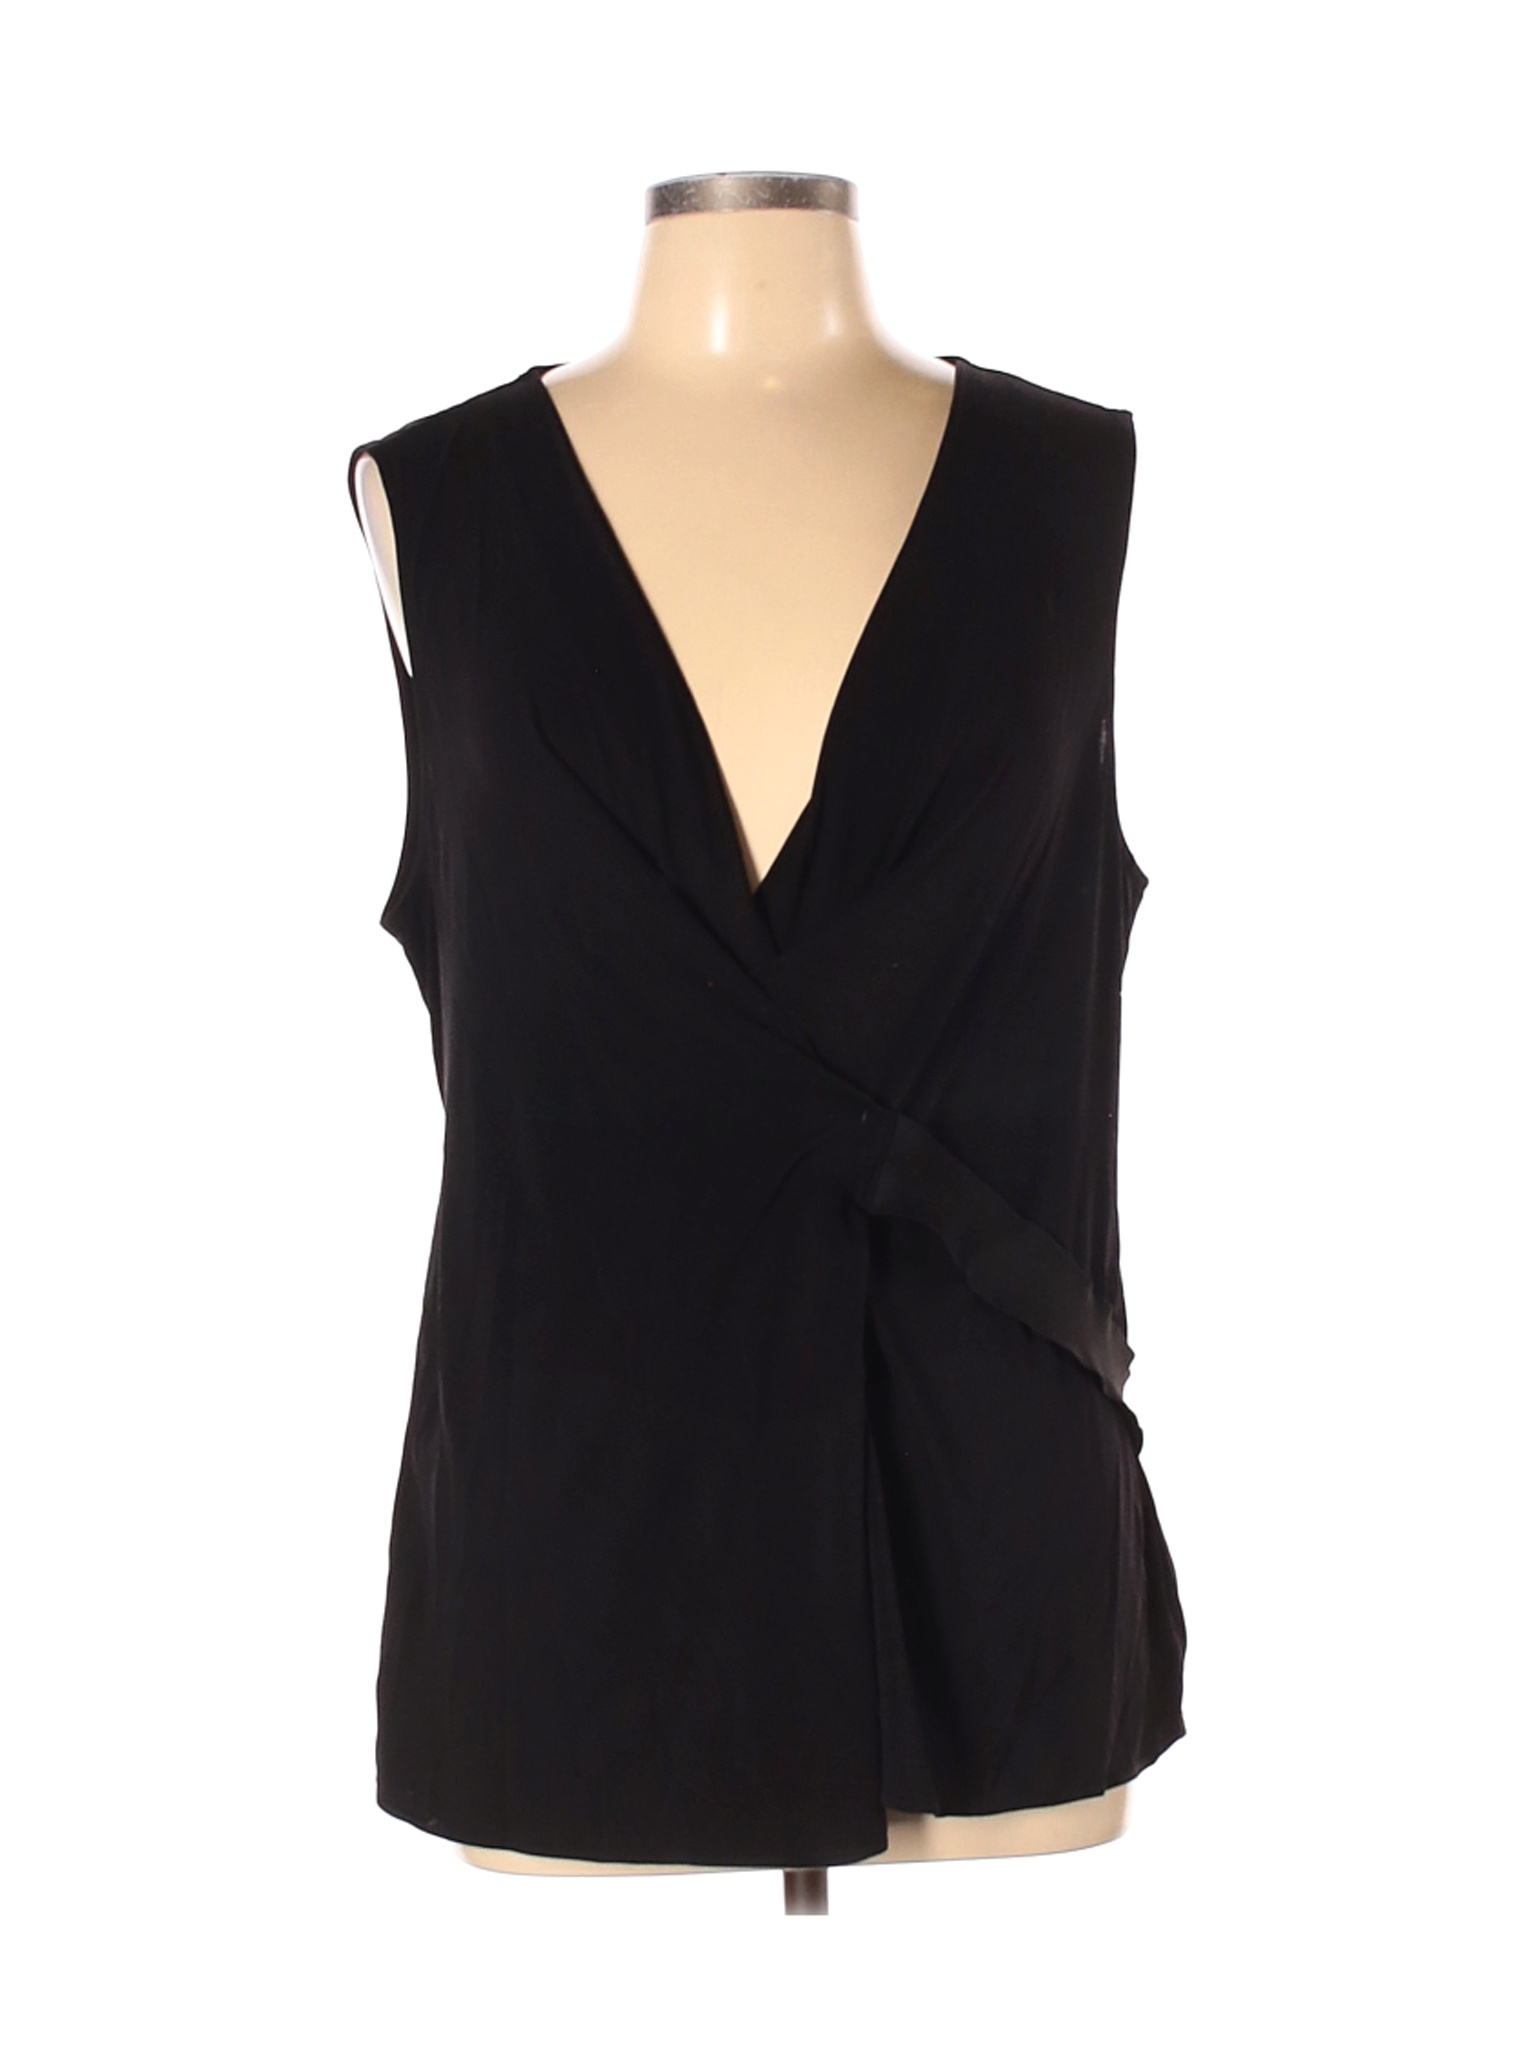 Kenneth Cole New York Women Black Short Sleeve Top L | eBay